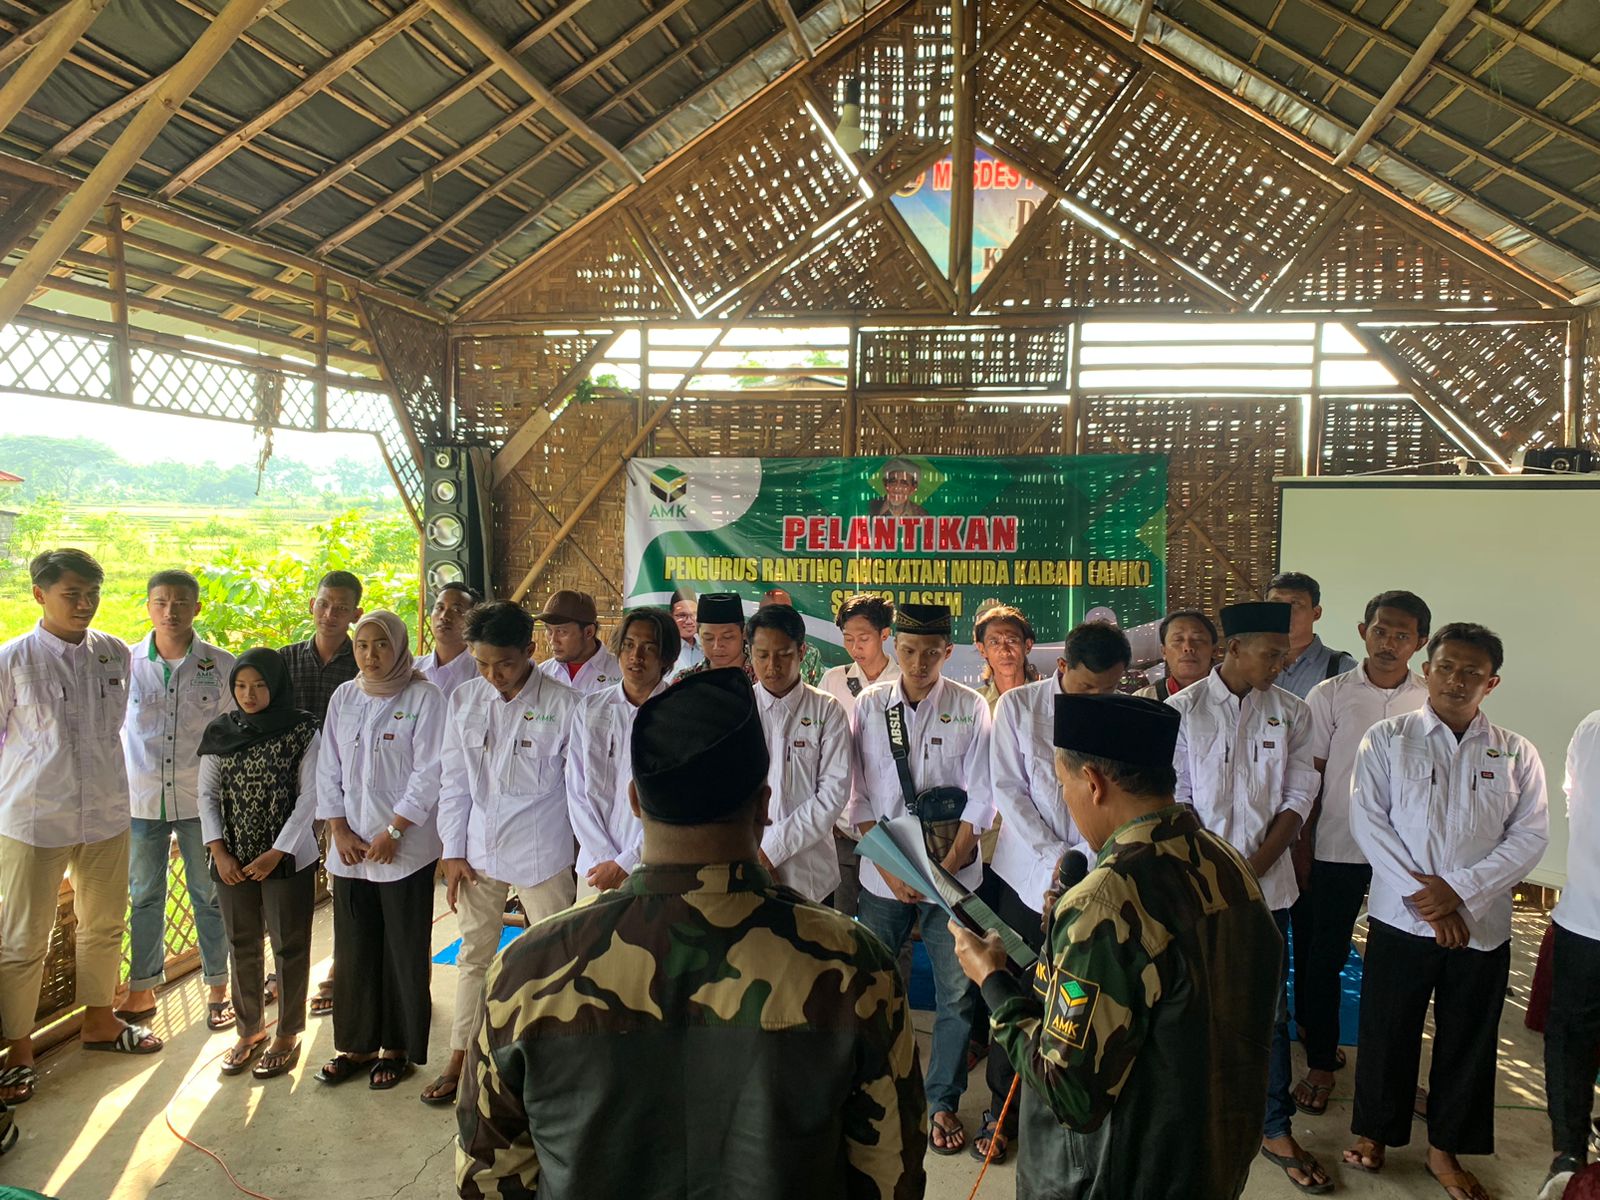 20 desa di Kecamatan Lasem mengirimkan Kader Untuk Bergabung Dalam pelantikan Ranting AMK